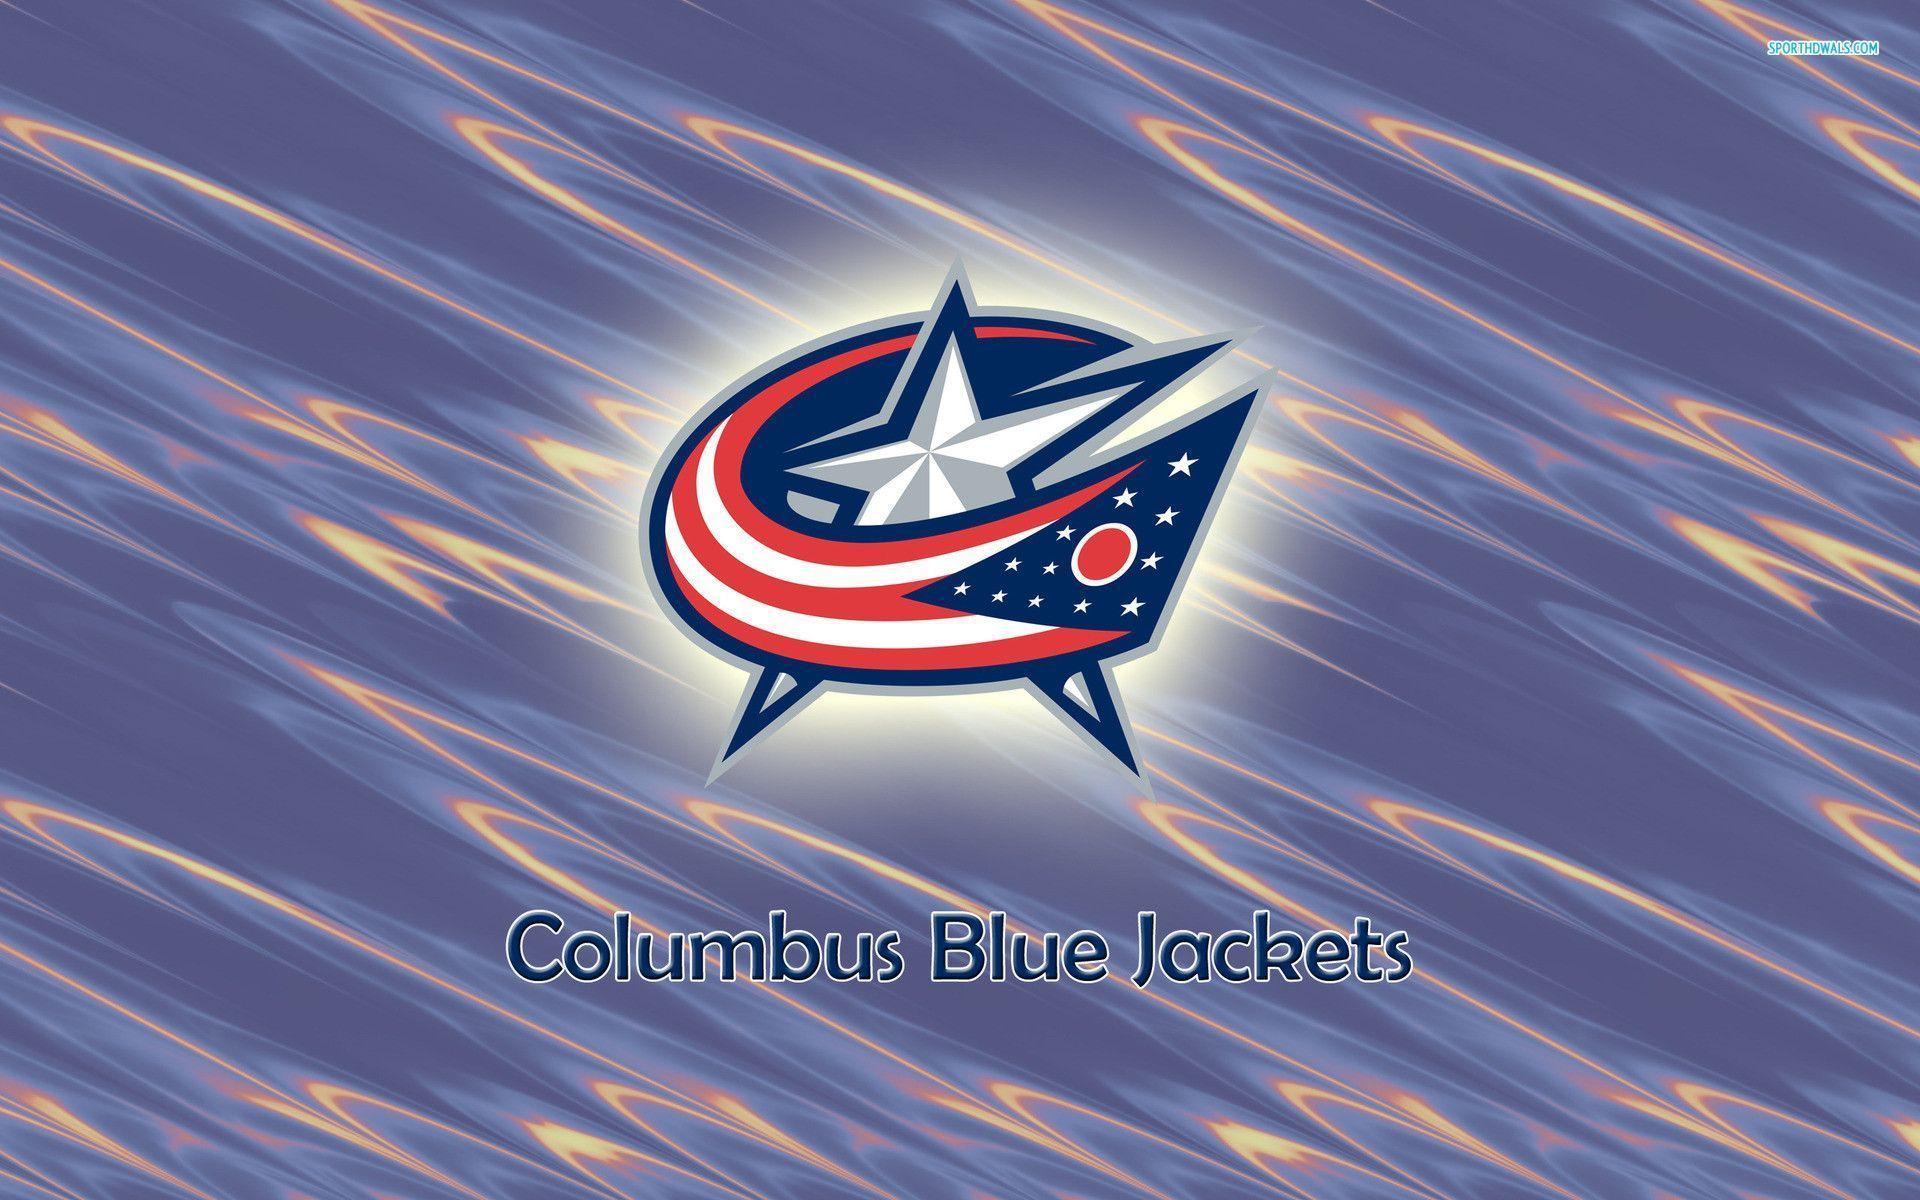 Columbus Blue Jackets HD Wallpaper 24565 Image. largepict